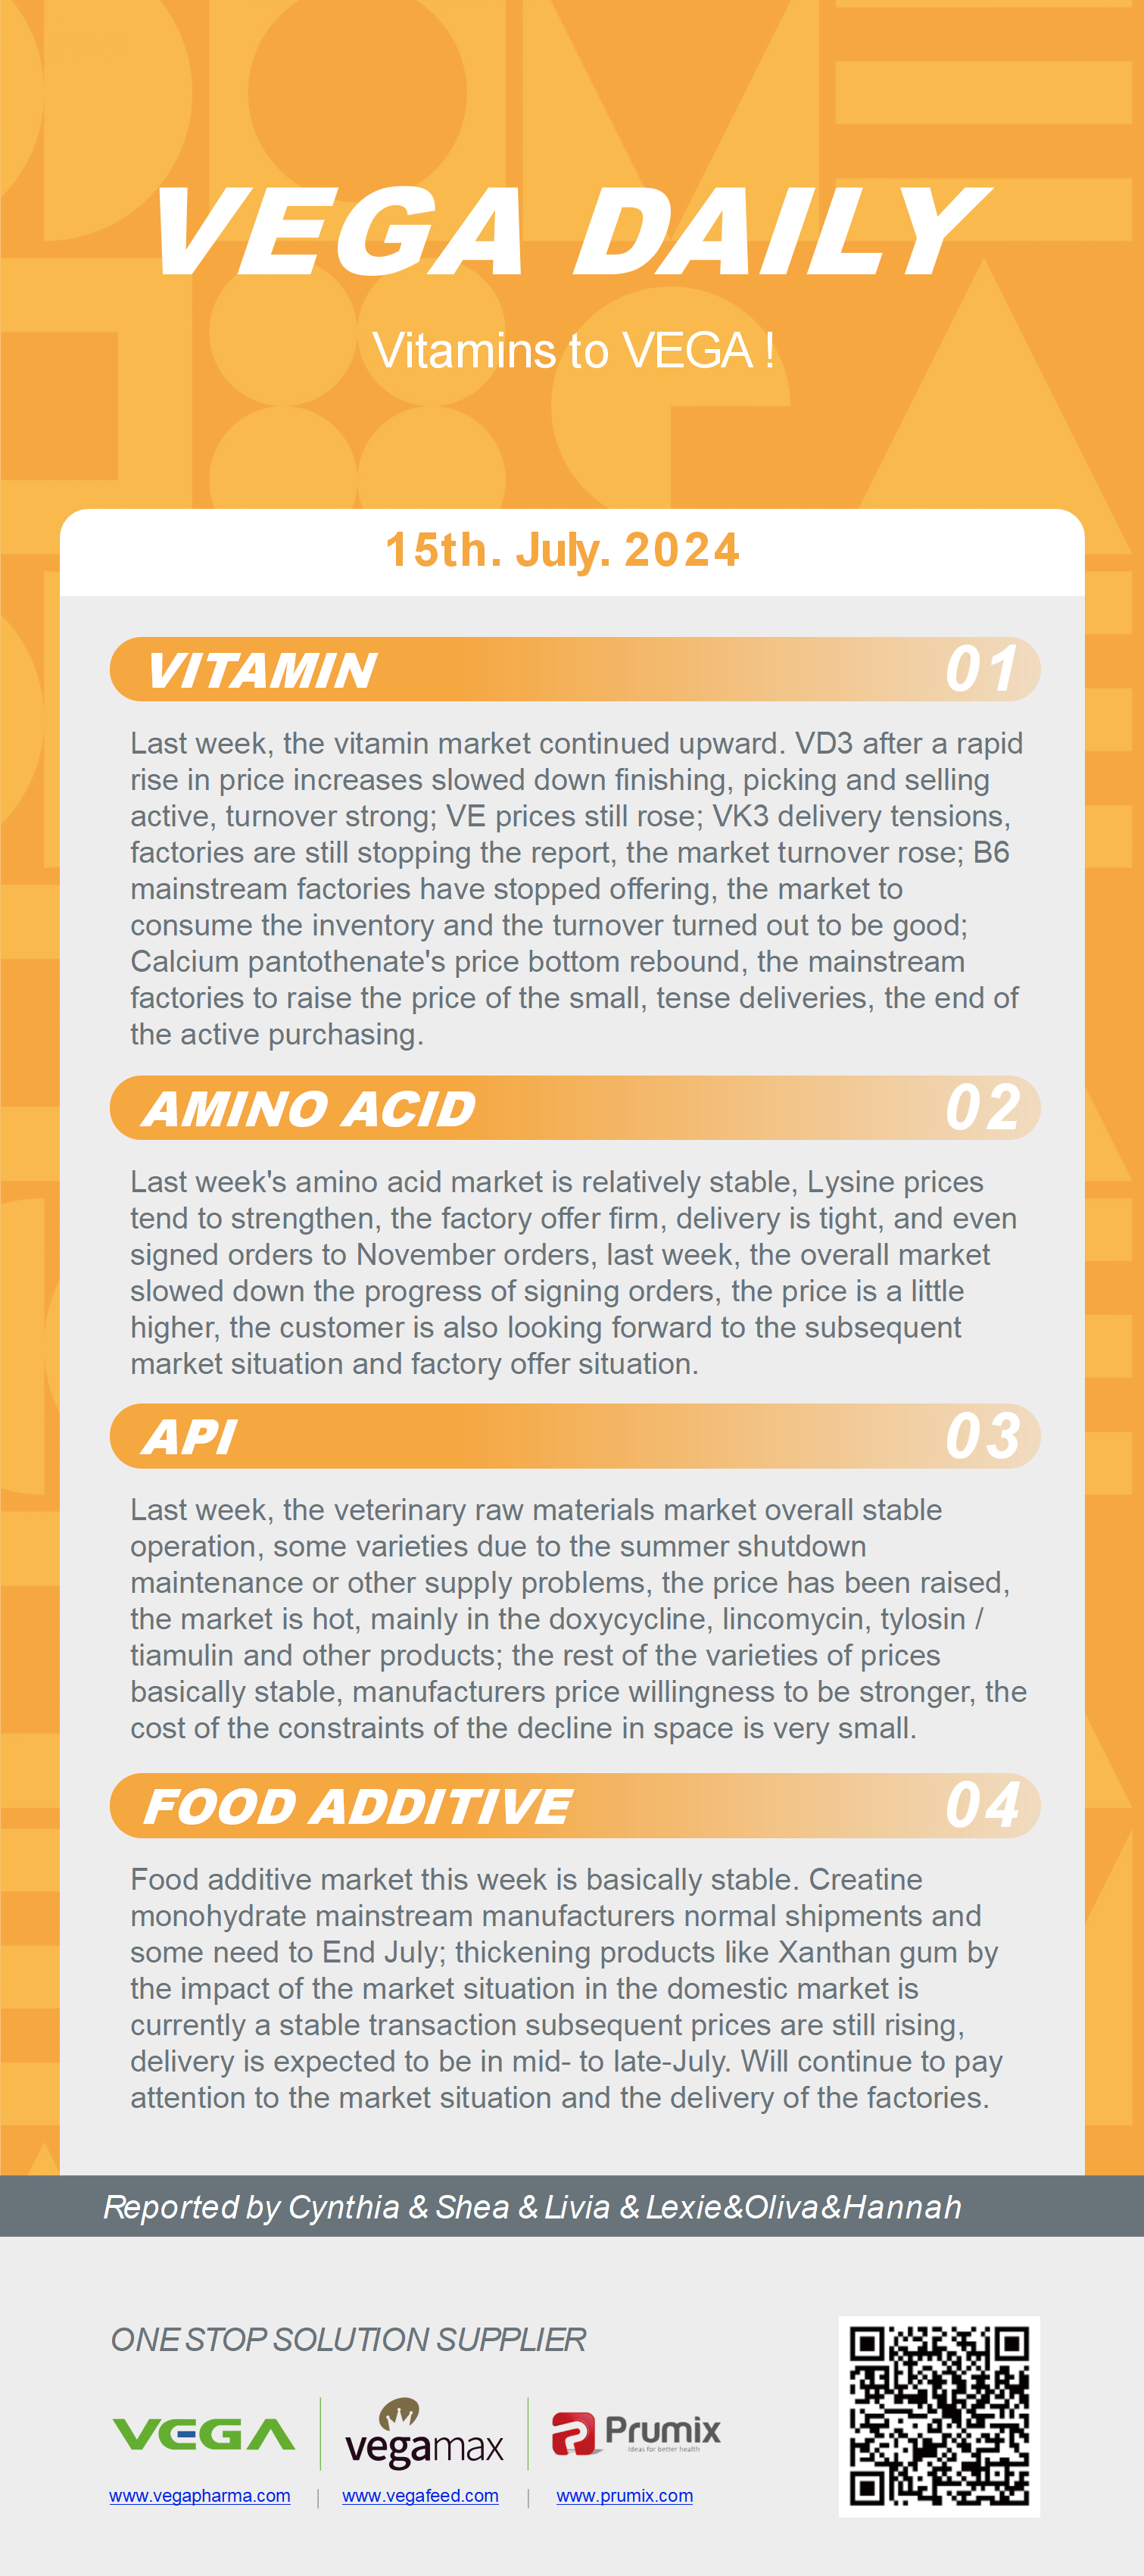 Vega Daily Dated on Jul 15th 2024 Vitamin Amino Acid APl Food Additives.png